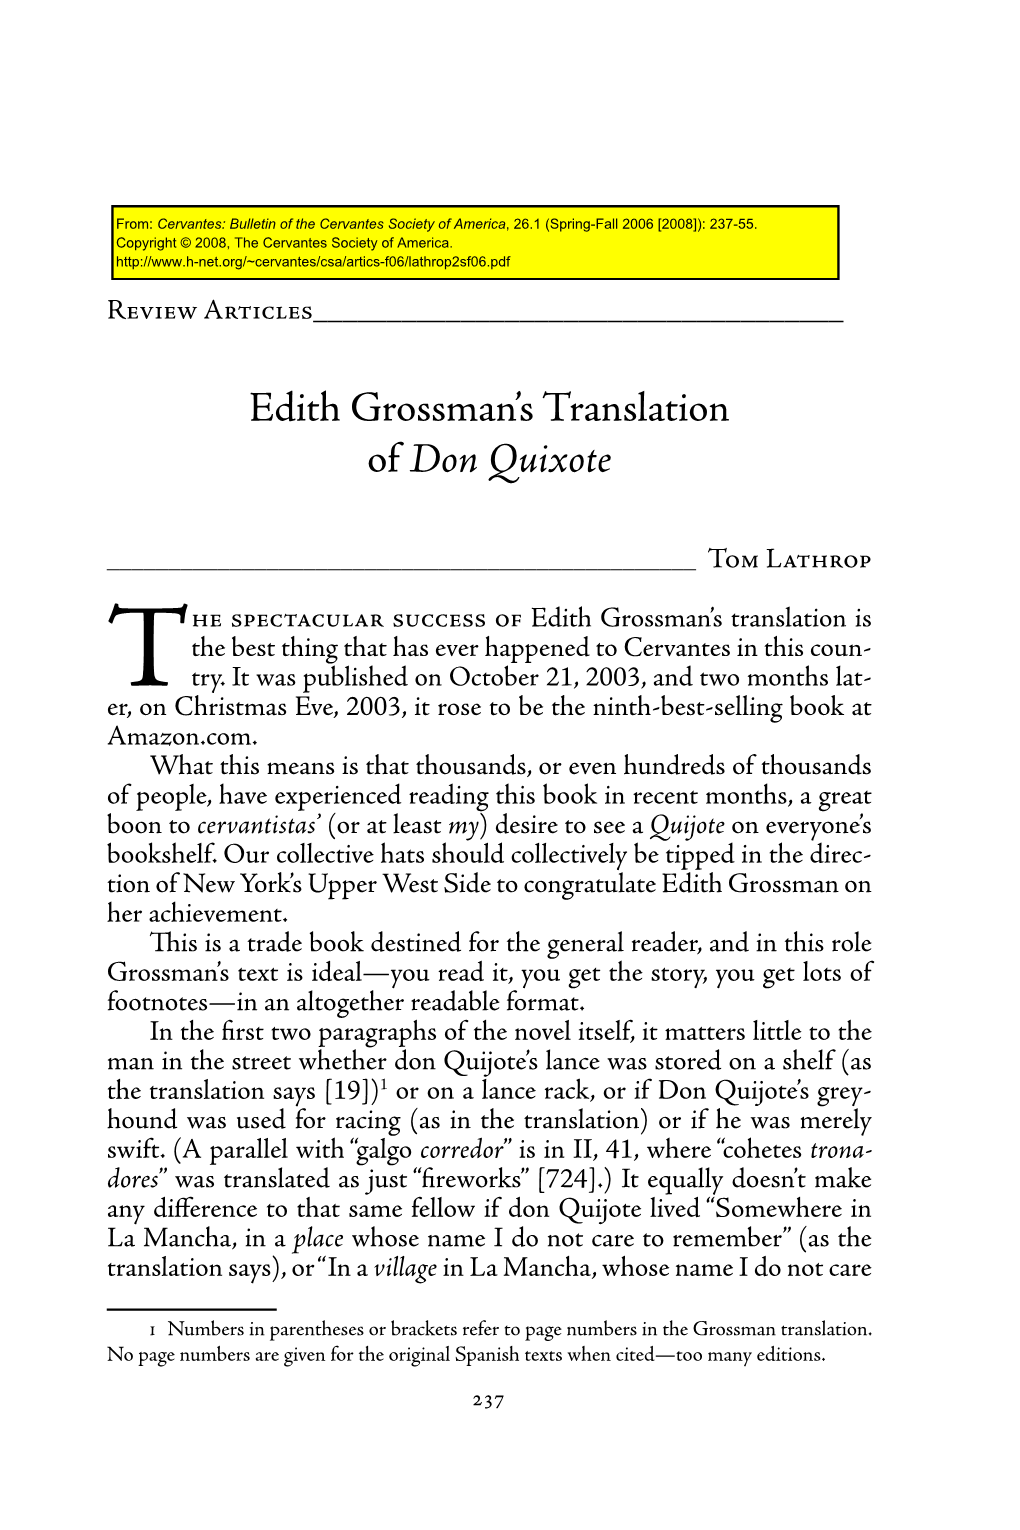 Edith Grossman's Translation of Don Quixote